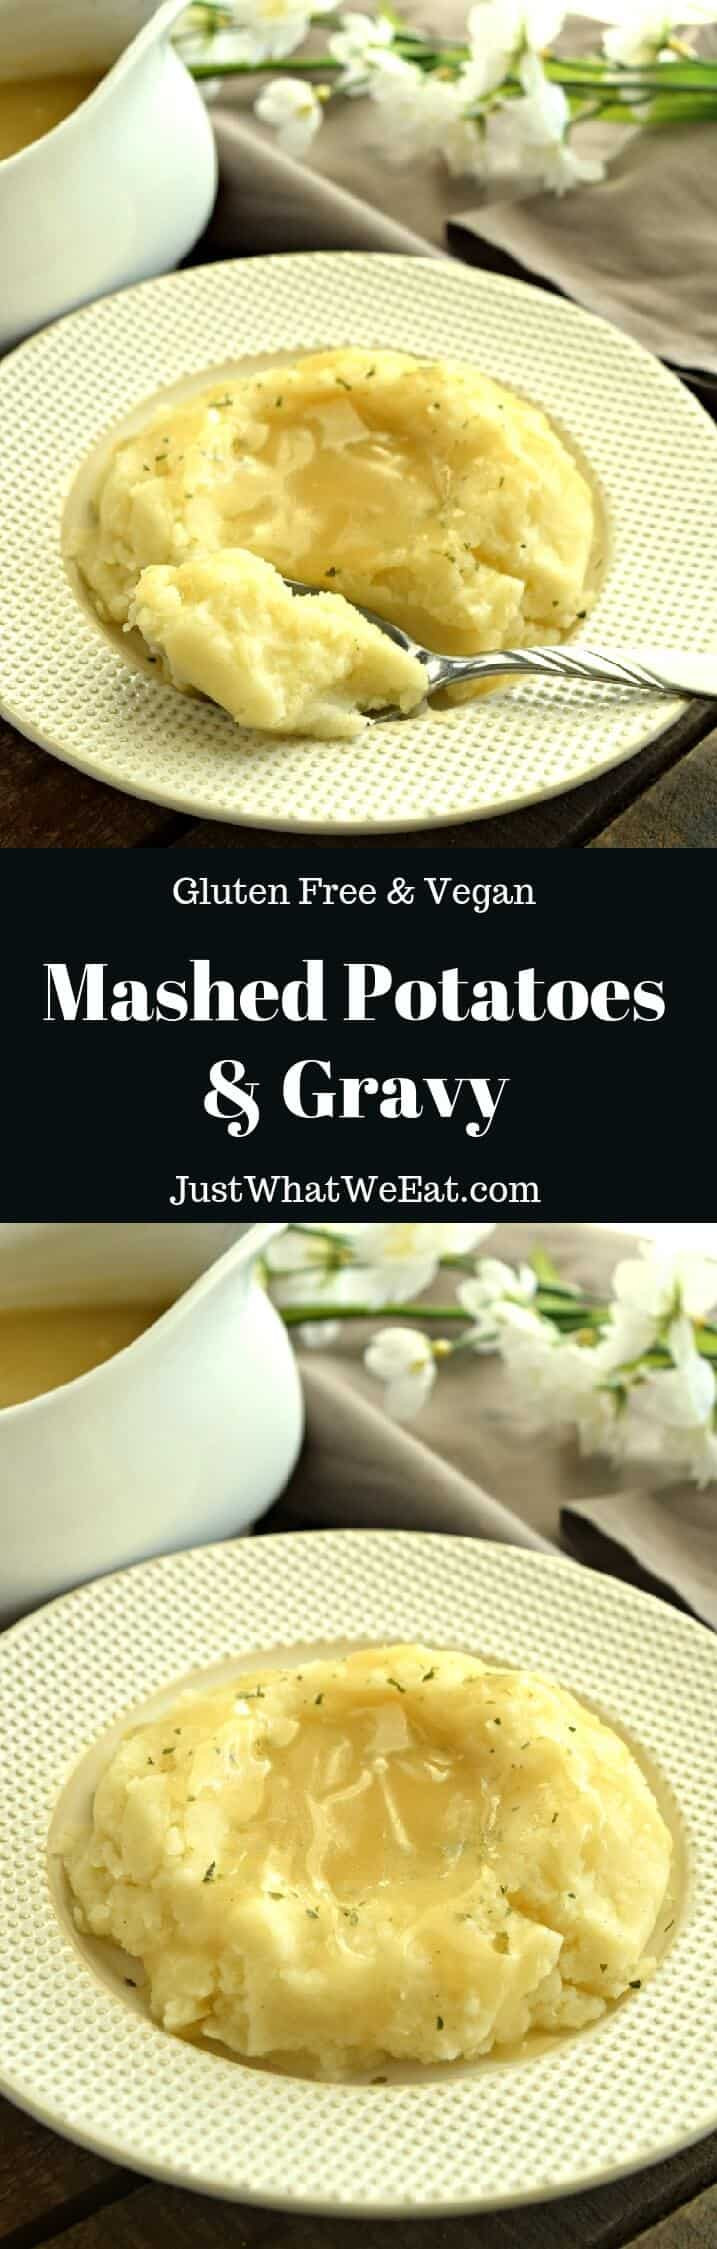 Are Mashed Potatoes Gluten Free
 Mashed Potatoes and Gravy Gluten Free & Vegan Just